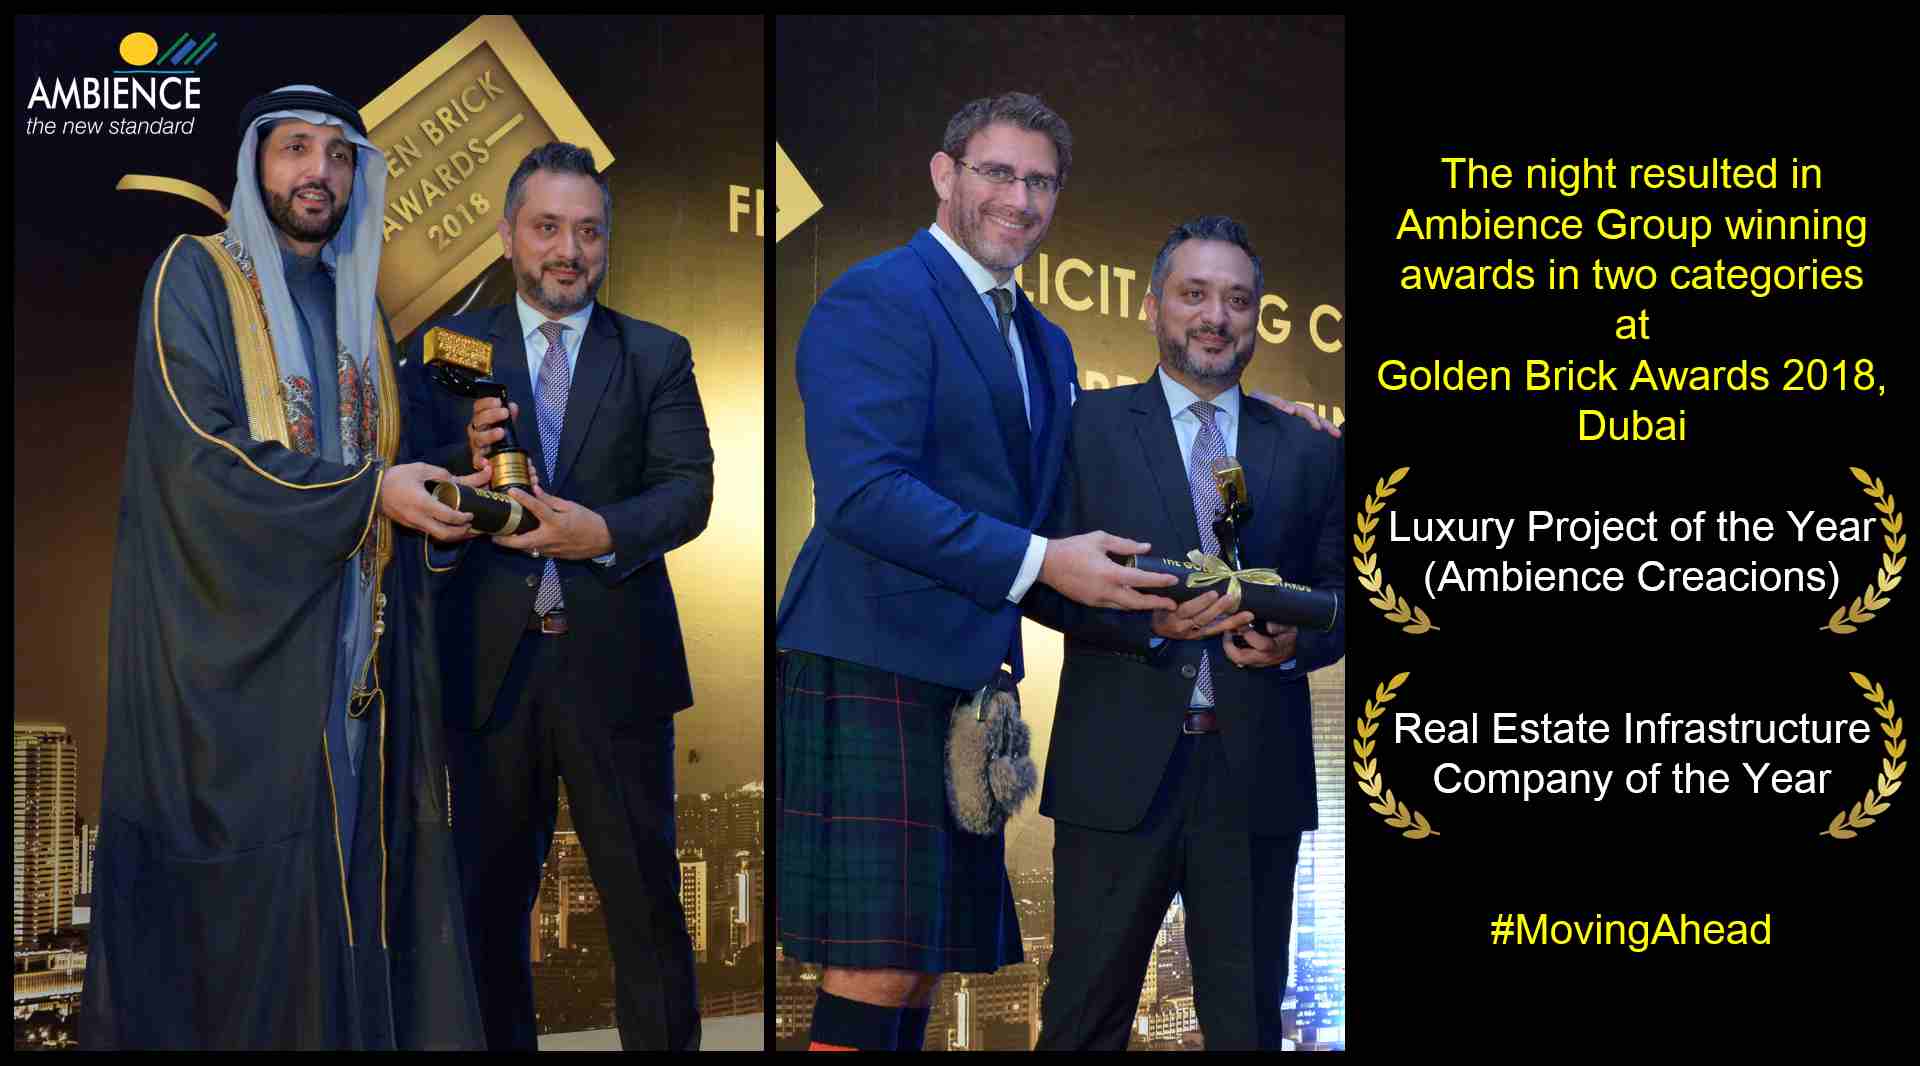 Ambience Group won 2 awards at Golden Brick Awards 2018, Dubai Update